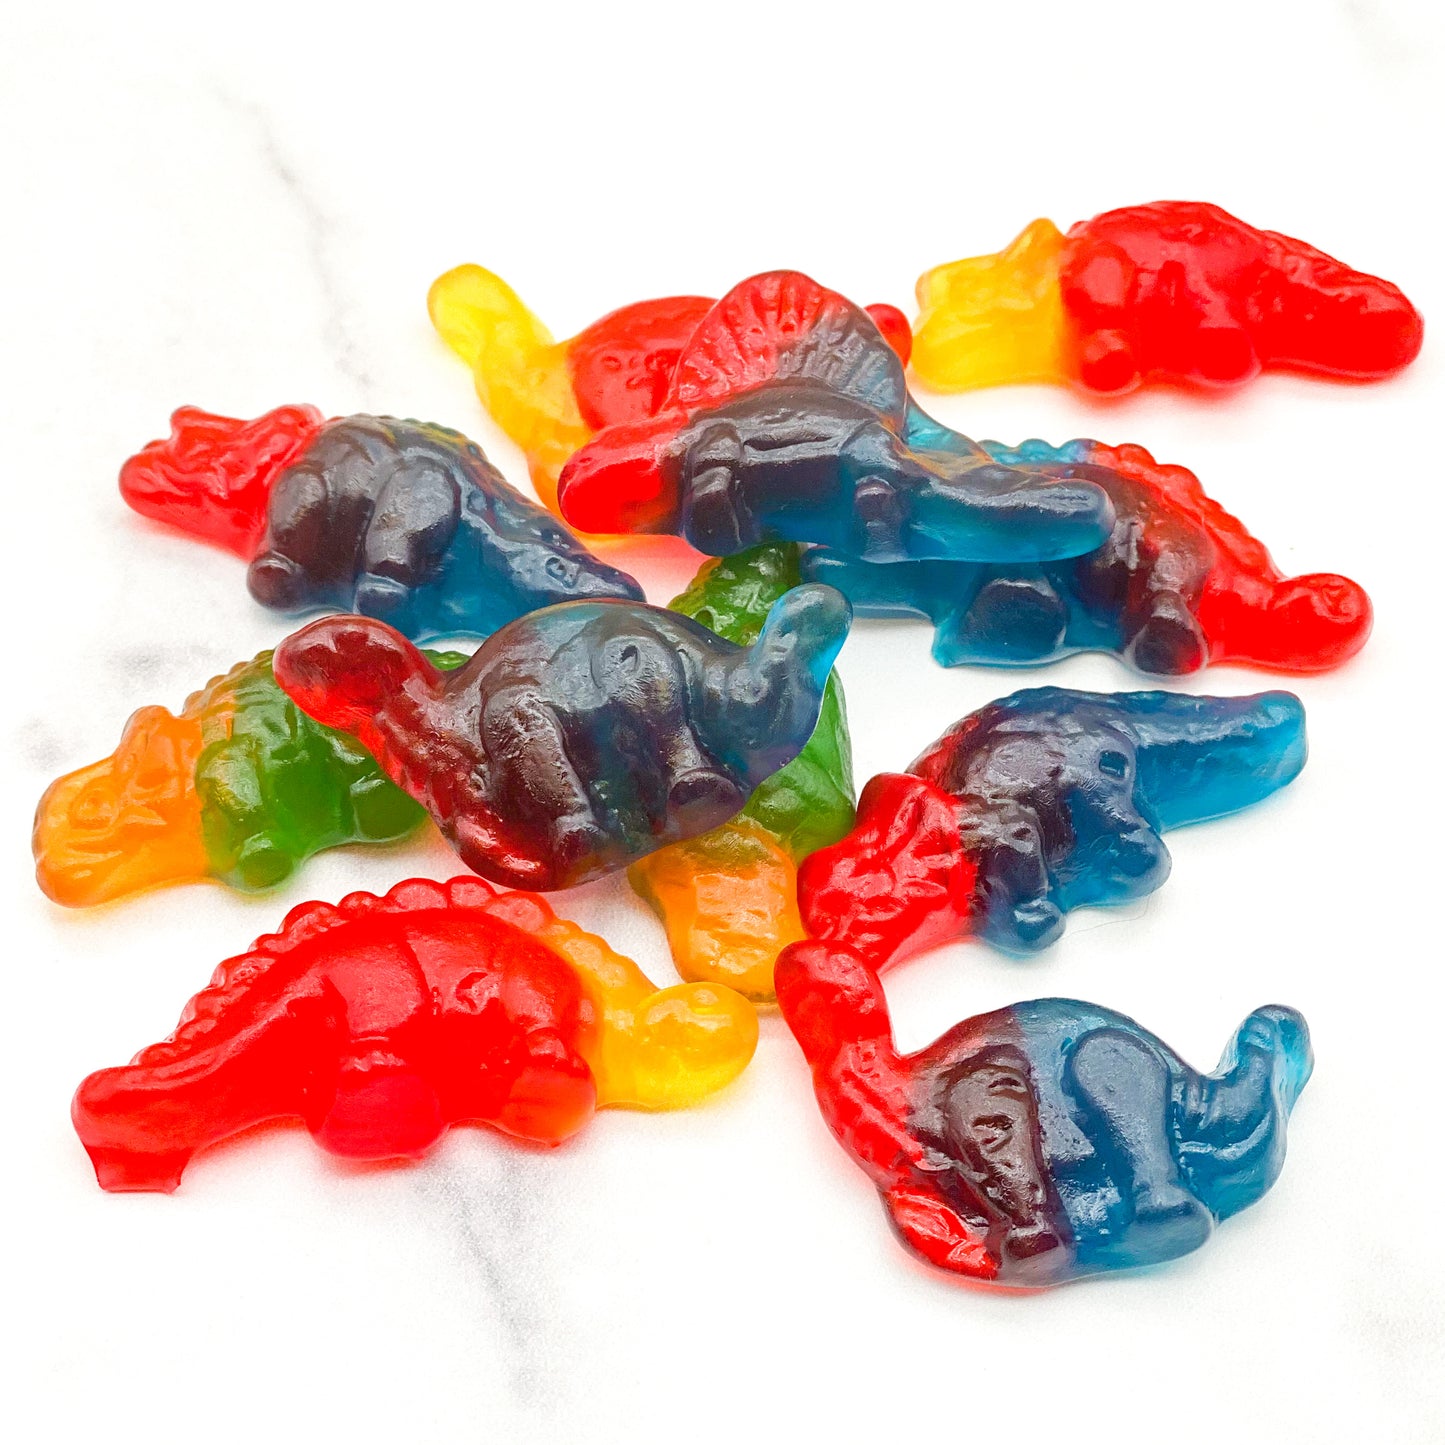 Gummi Bears - Natural – Mister Ed's Elephant Museum & Candy Emporium